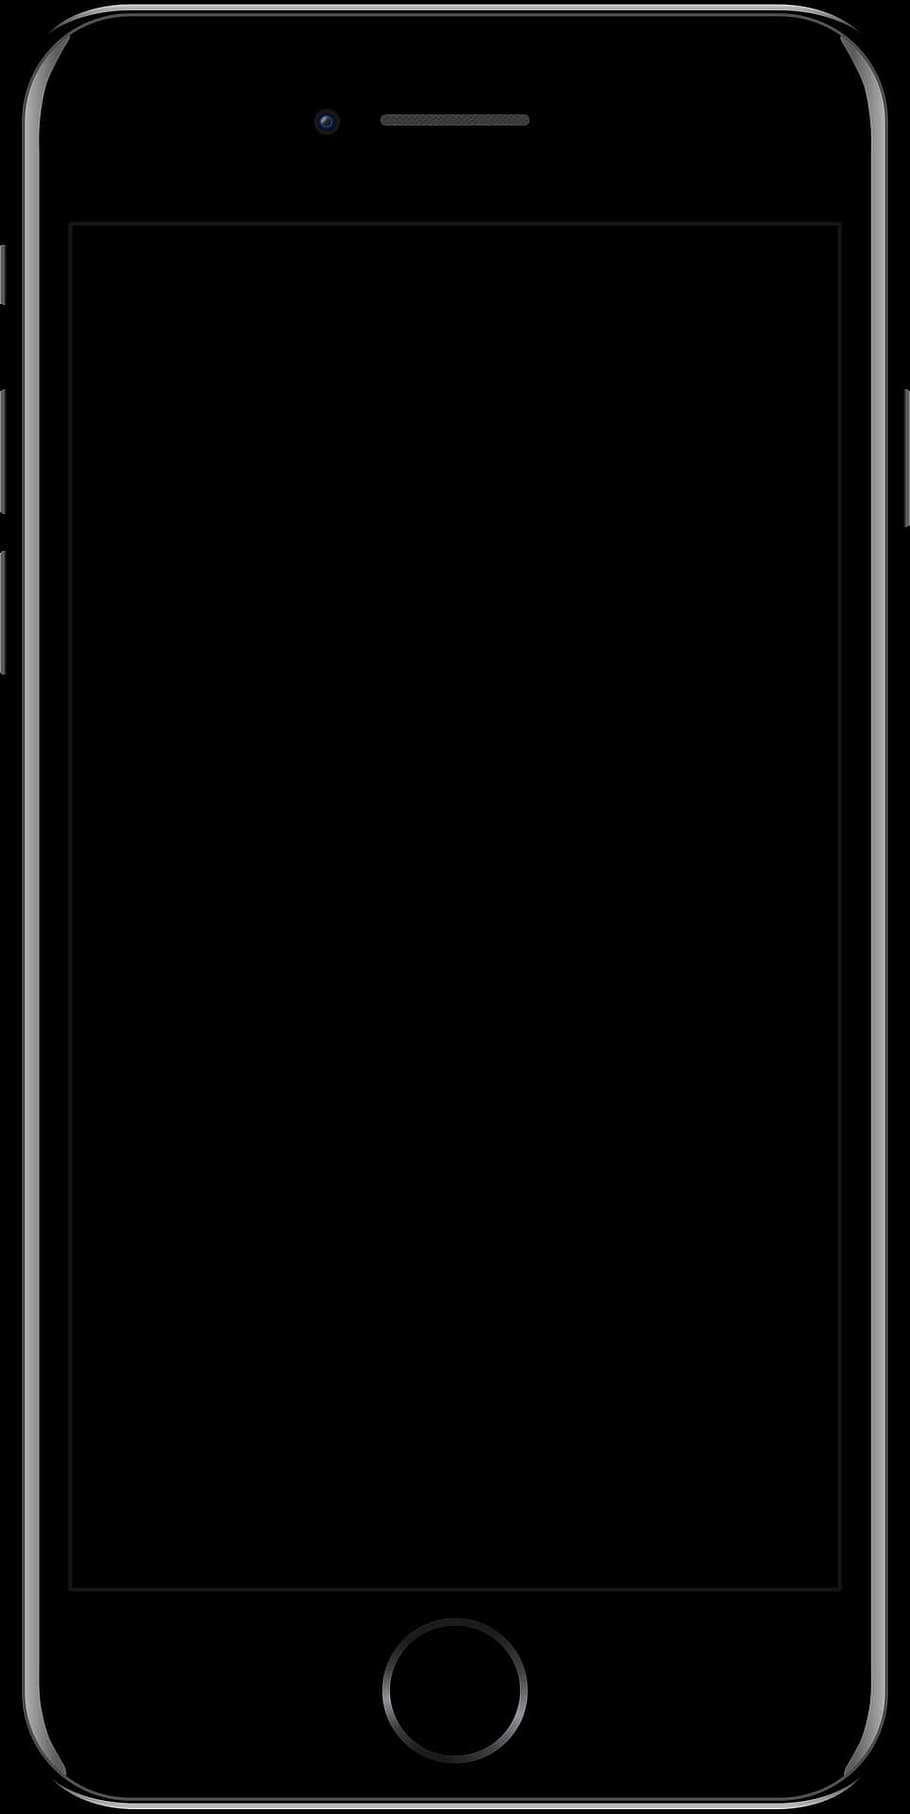 HD wallpaper: Jet Black Iphone 7, apple, gadget, mobile phone, smartphone,  technology | Wallpaper Flare